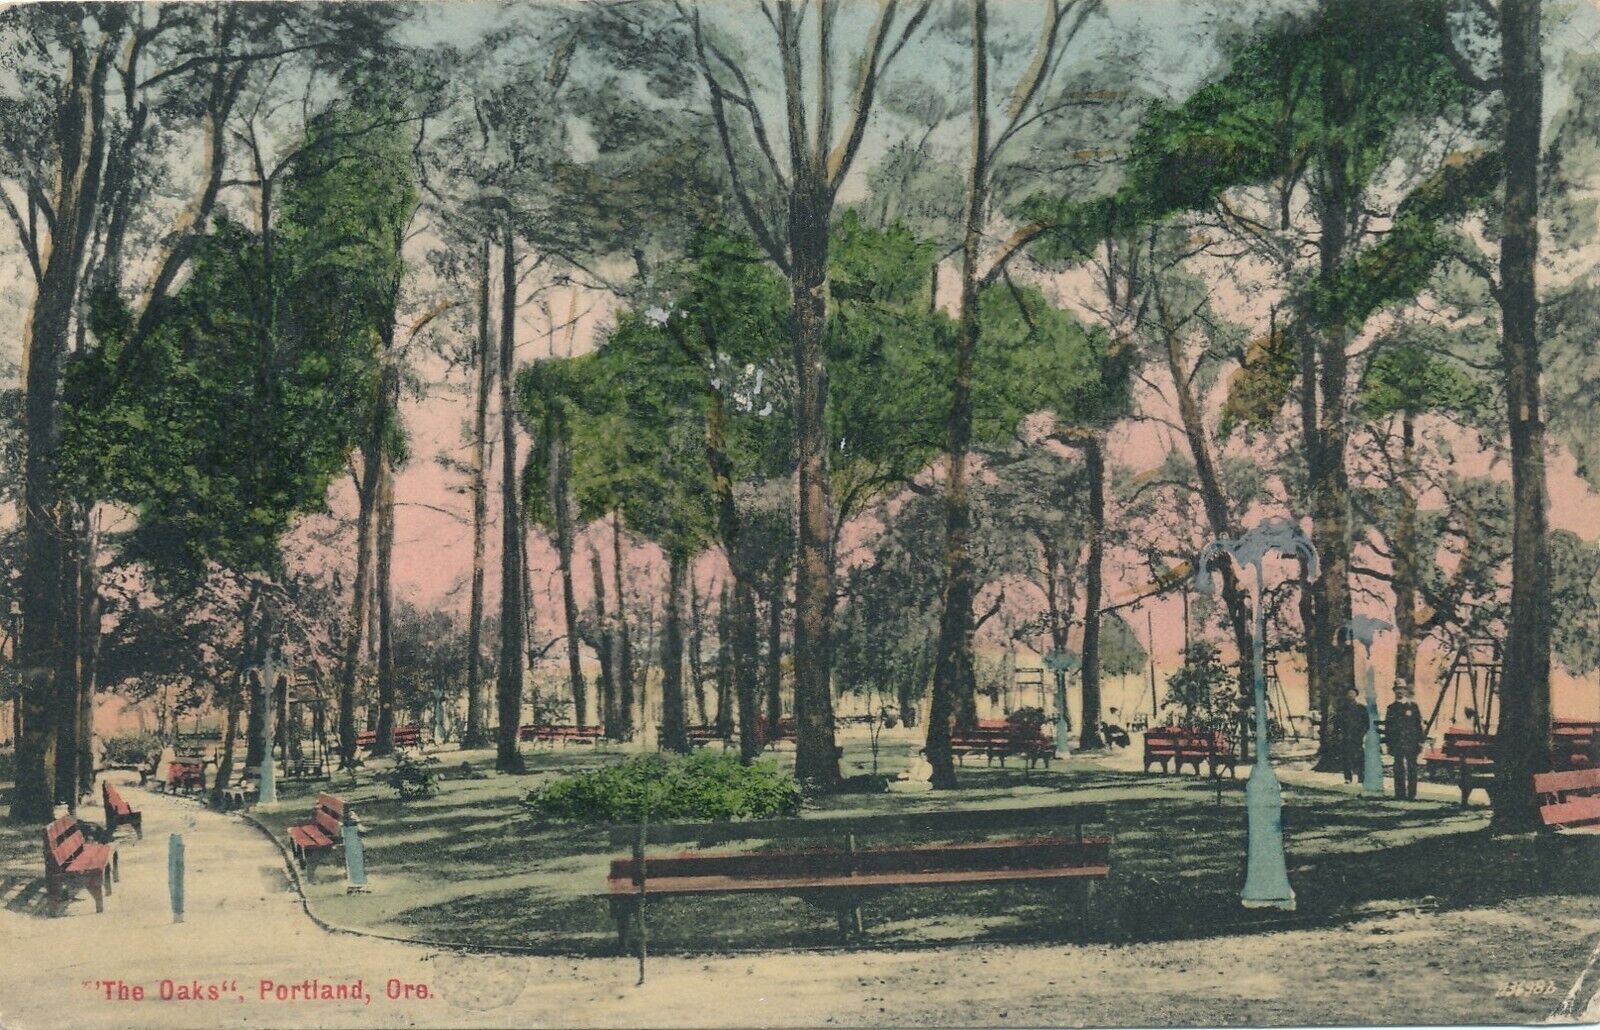 PORTLAND OR – The Oaks - 1908